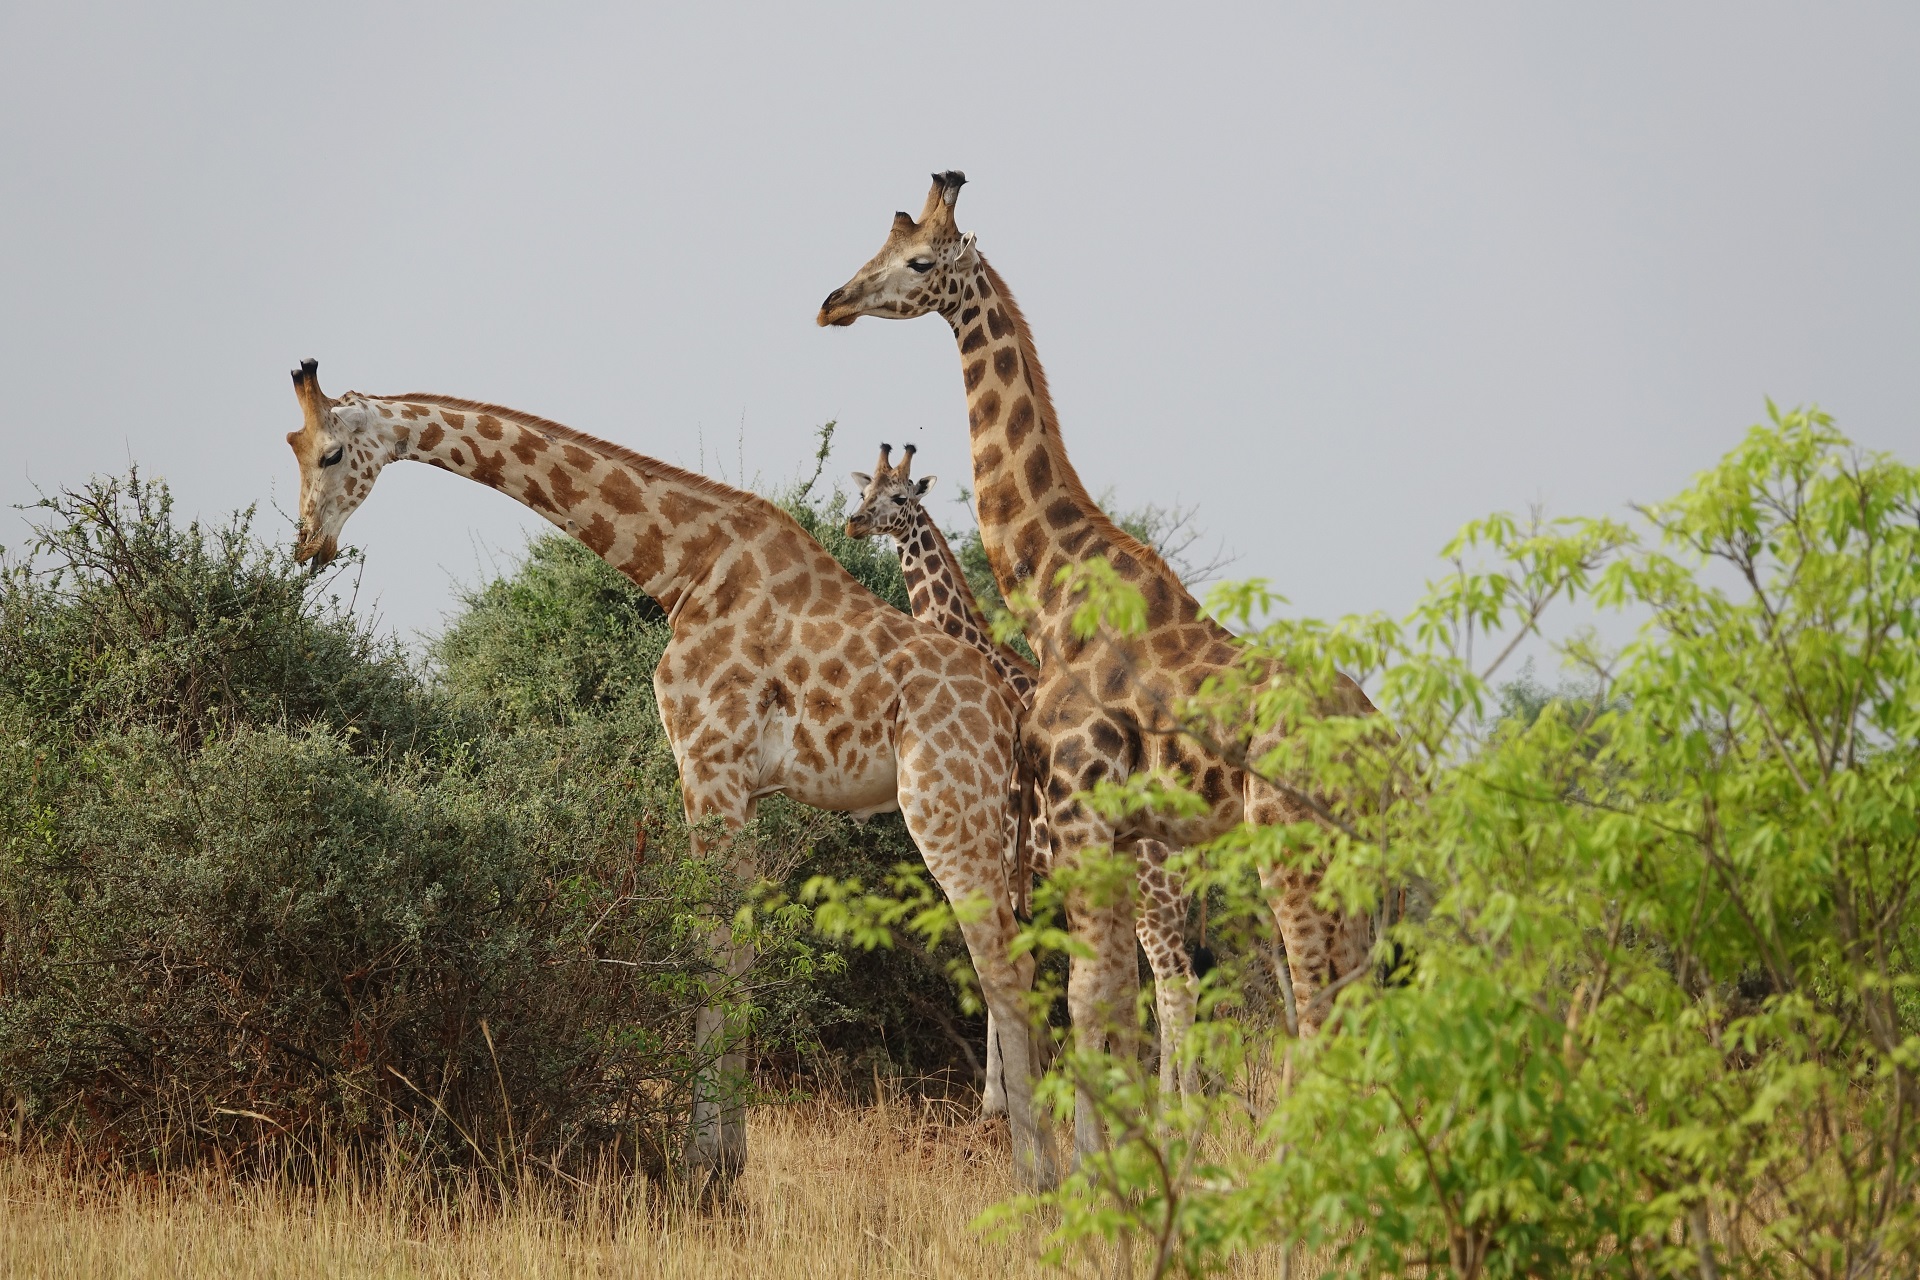 Murchison giraffe in the wild 

IMAGE: JP 2017